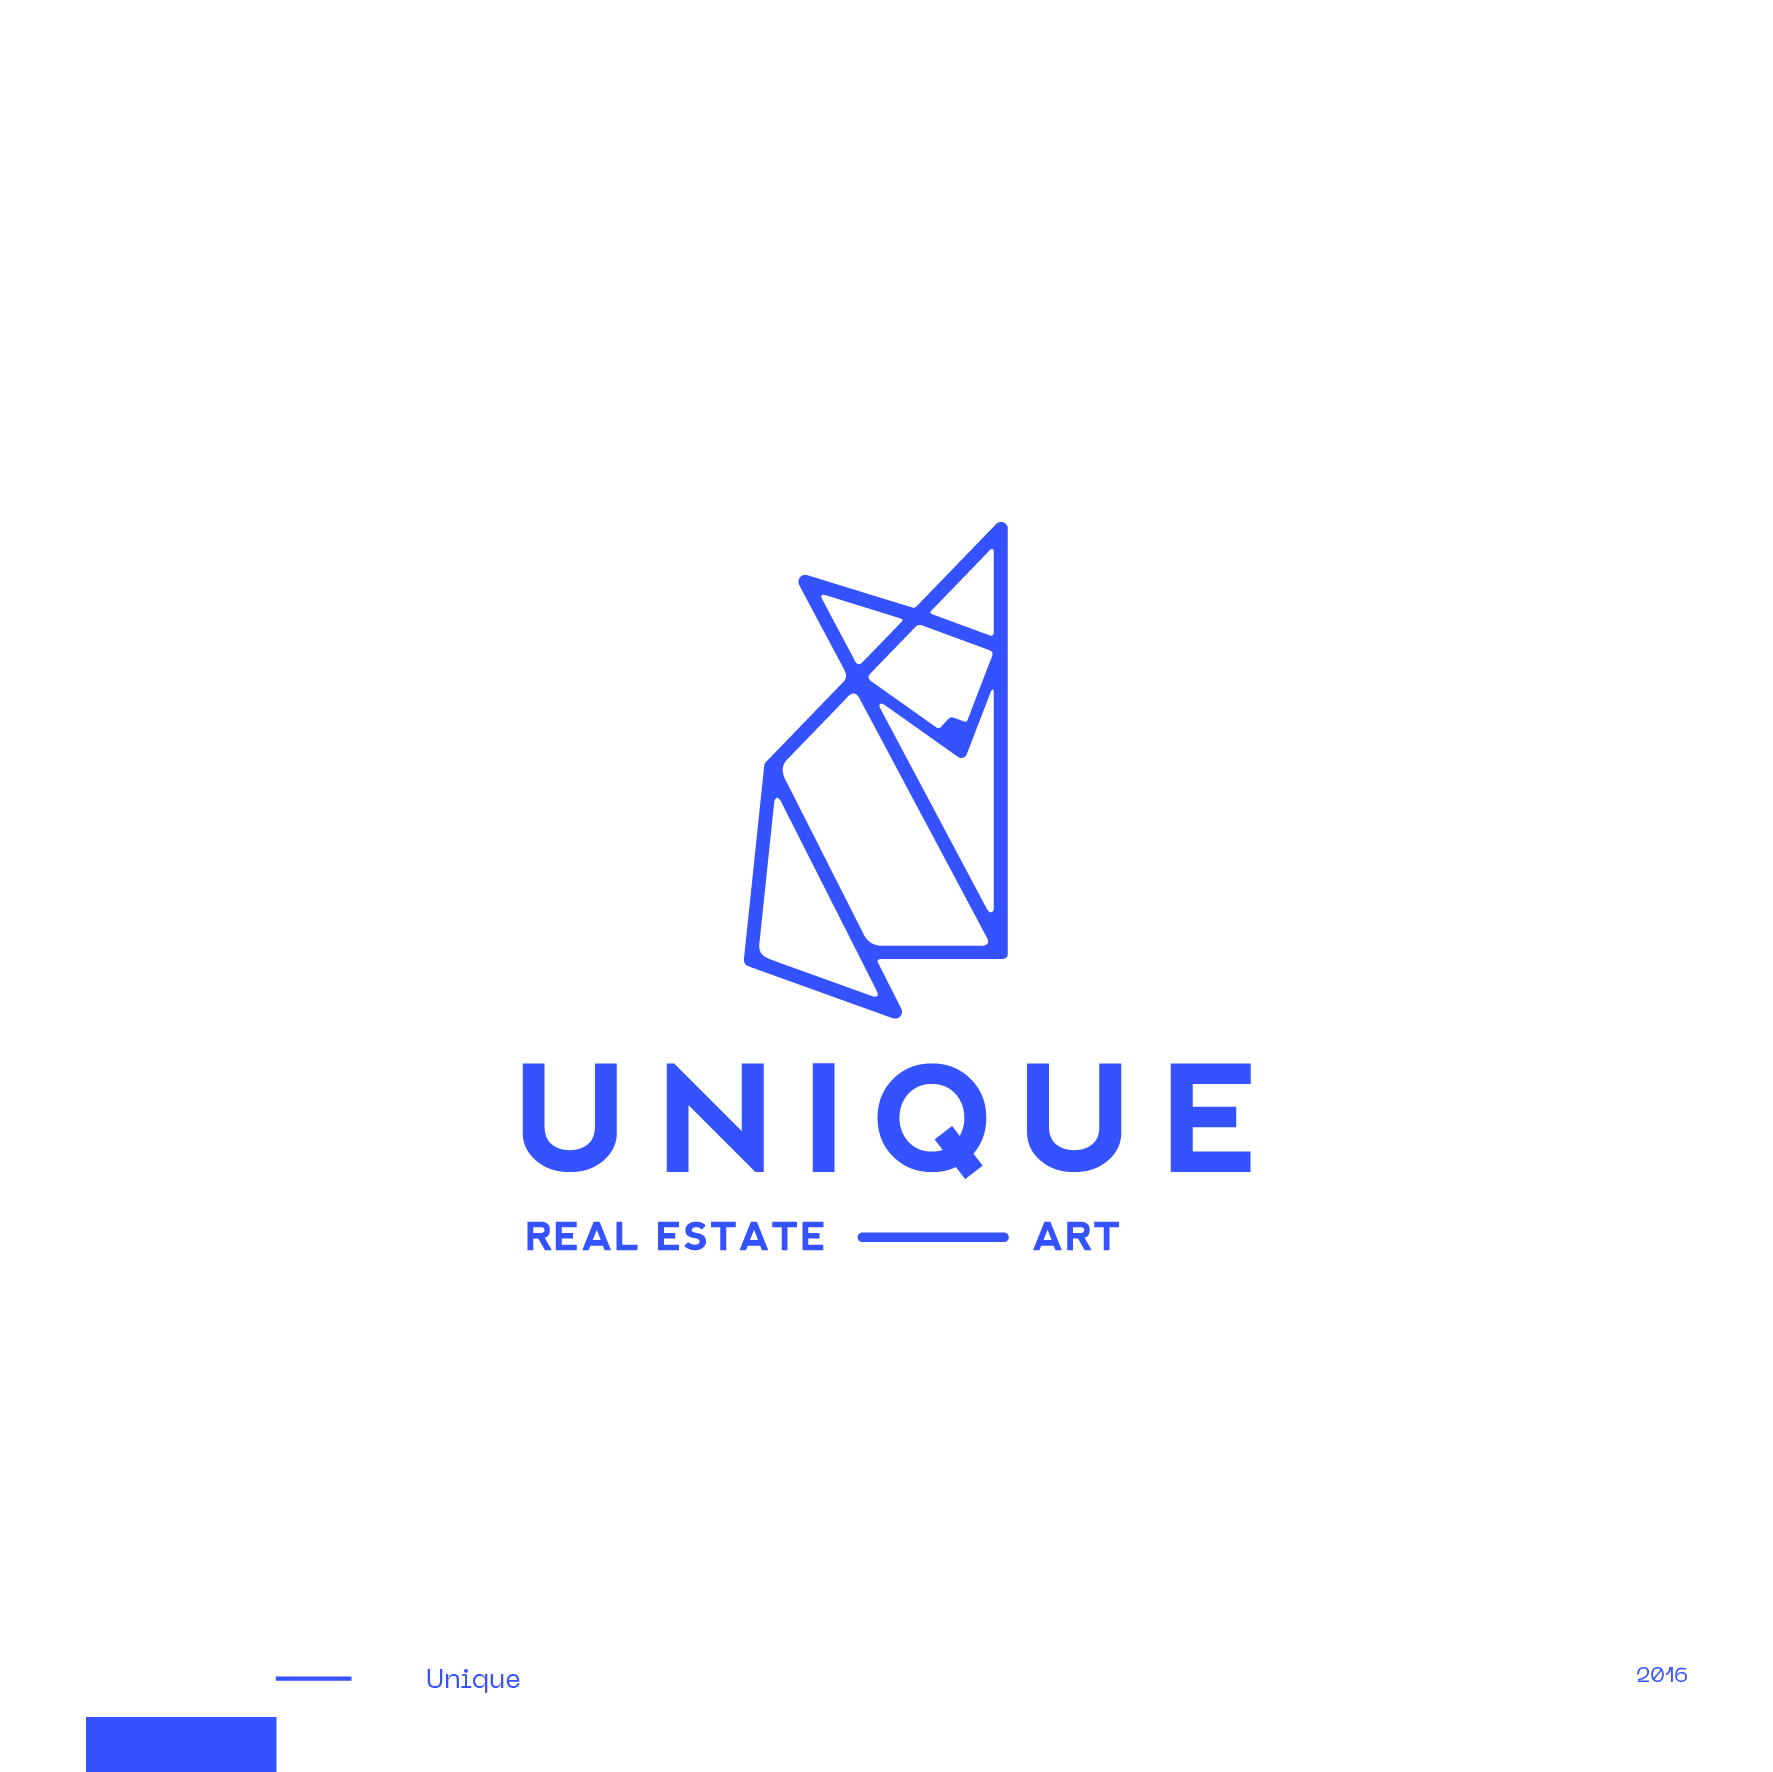 Guapo_Design_Studio_Logotype_Collection_Unique